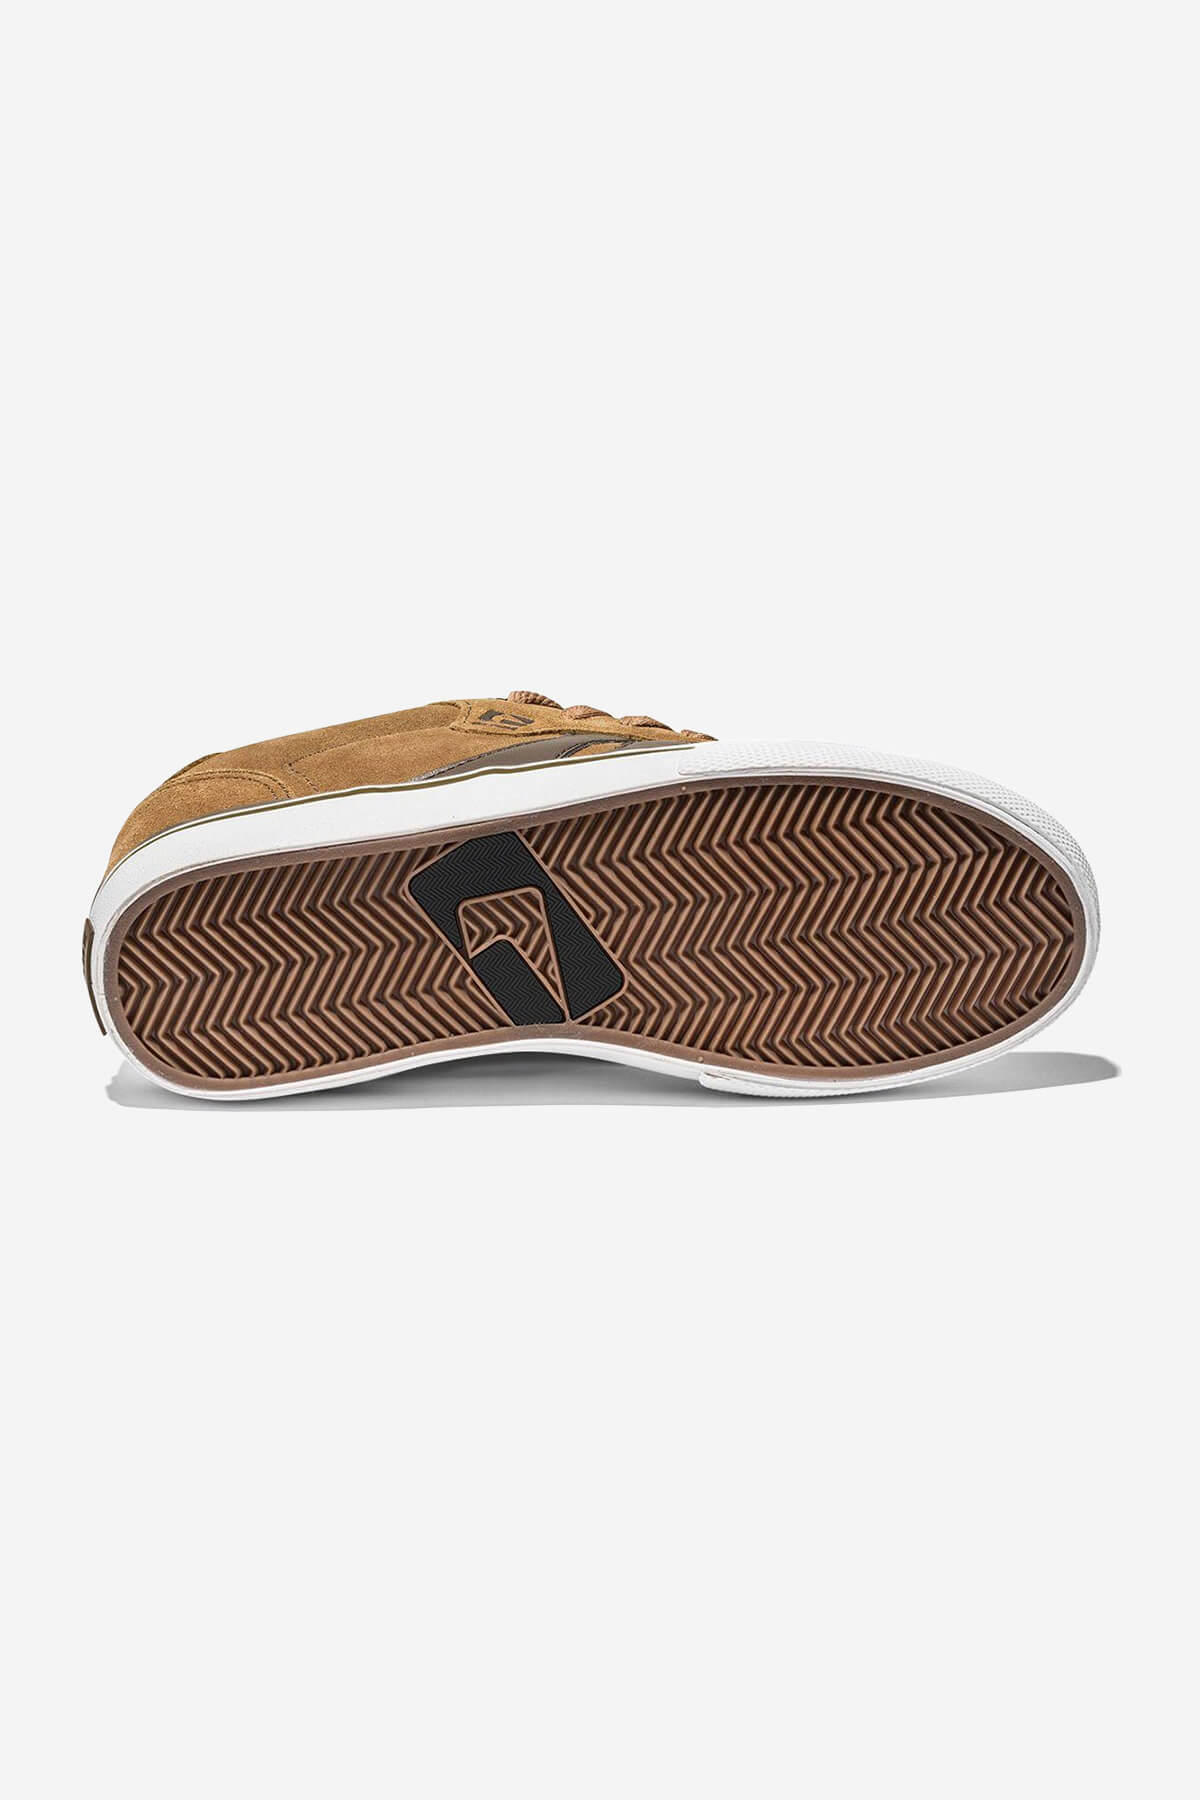 Globe - Encore 2 - Tan/Brown - skateboard Schuhe